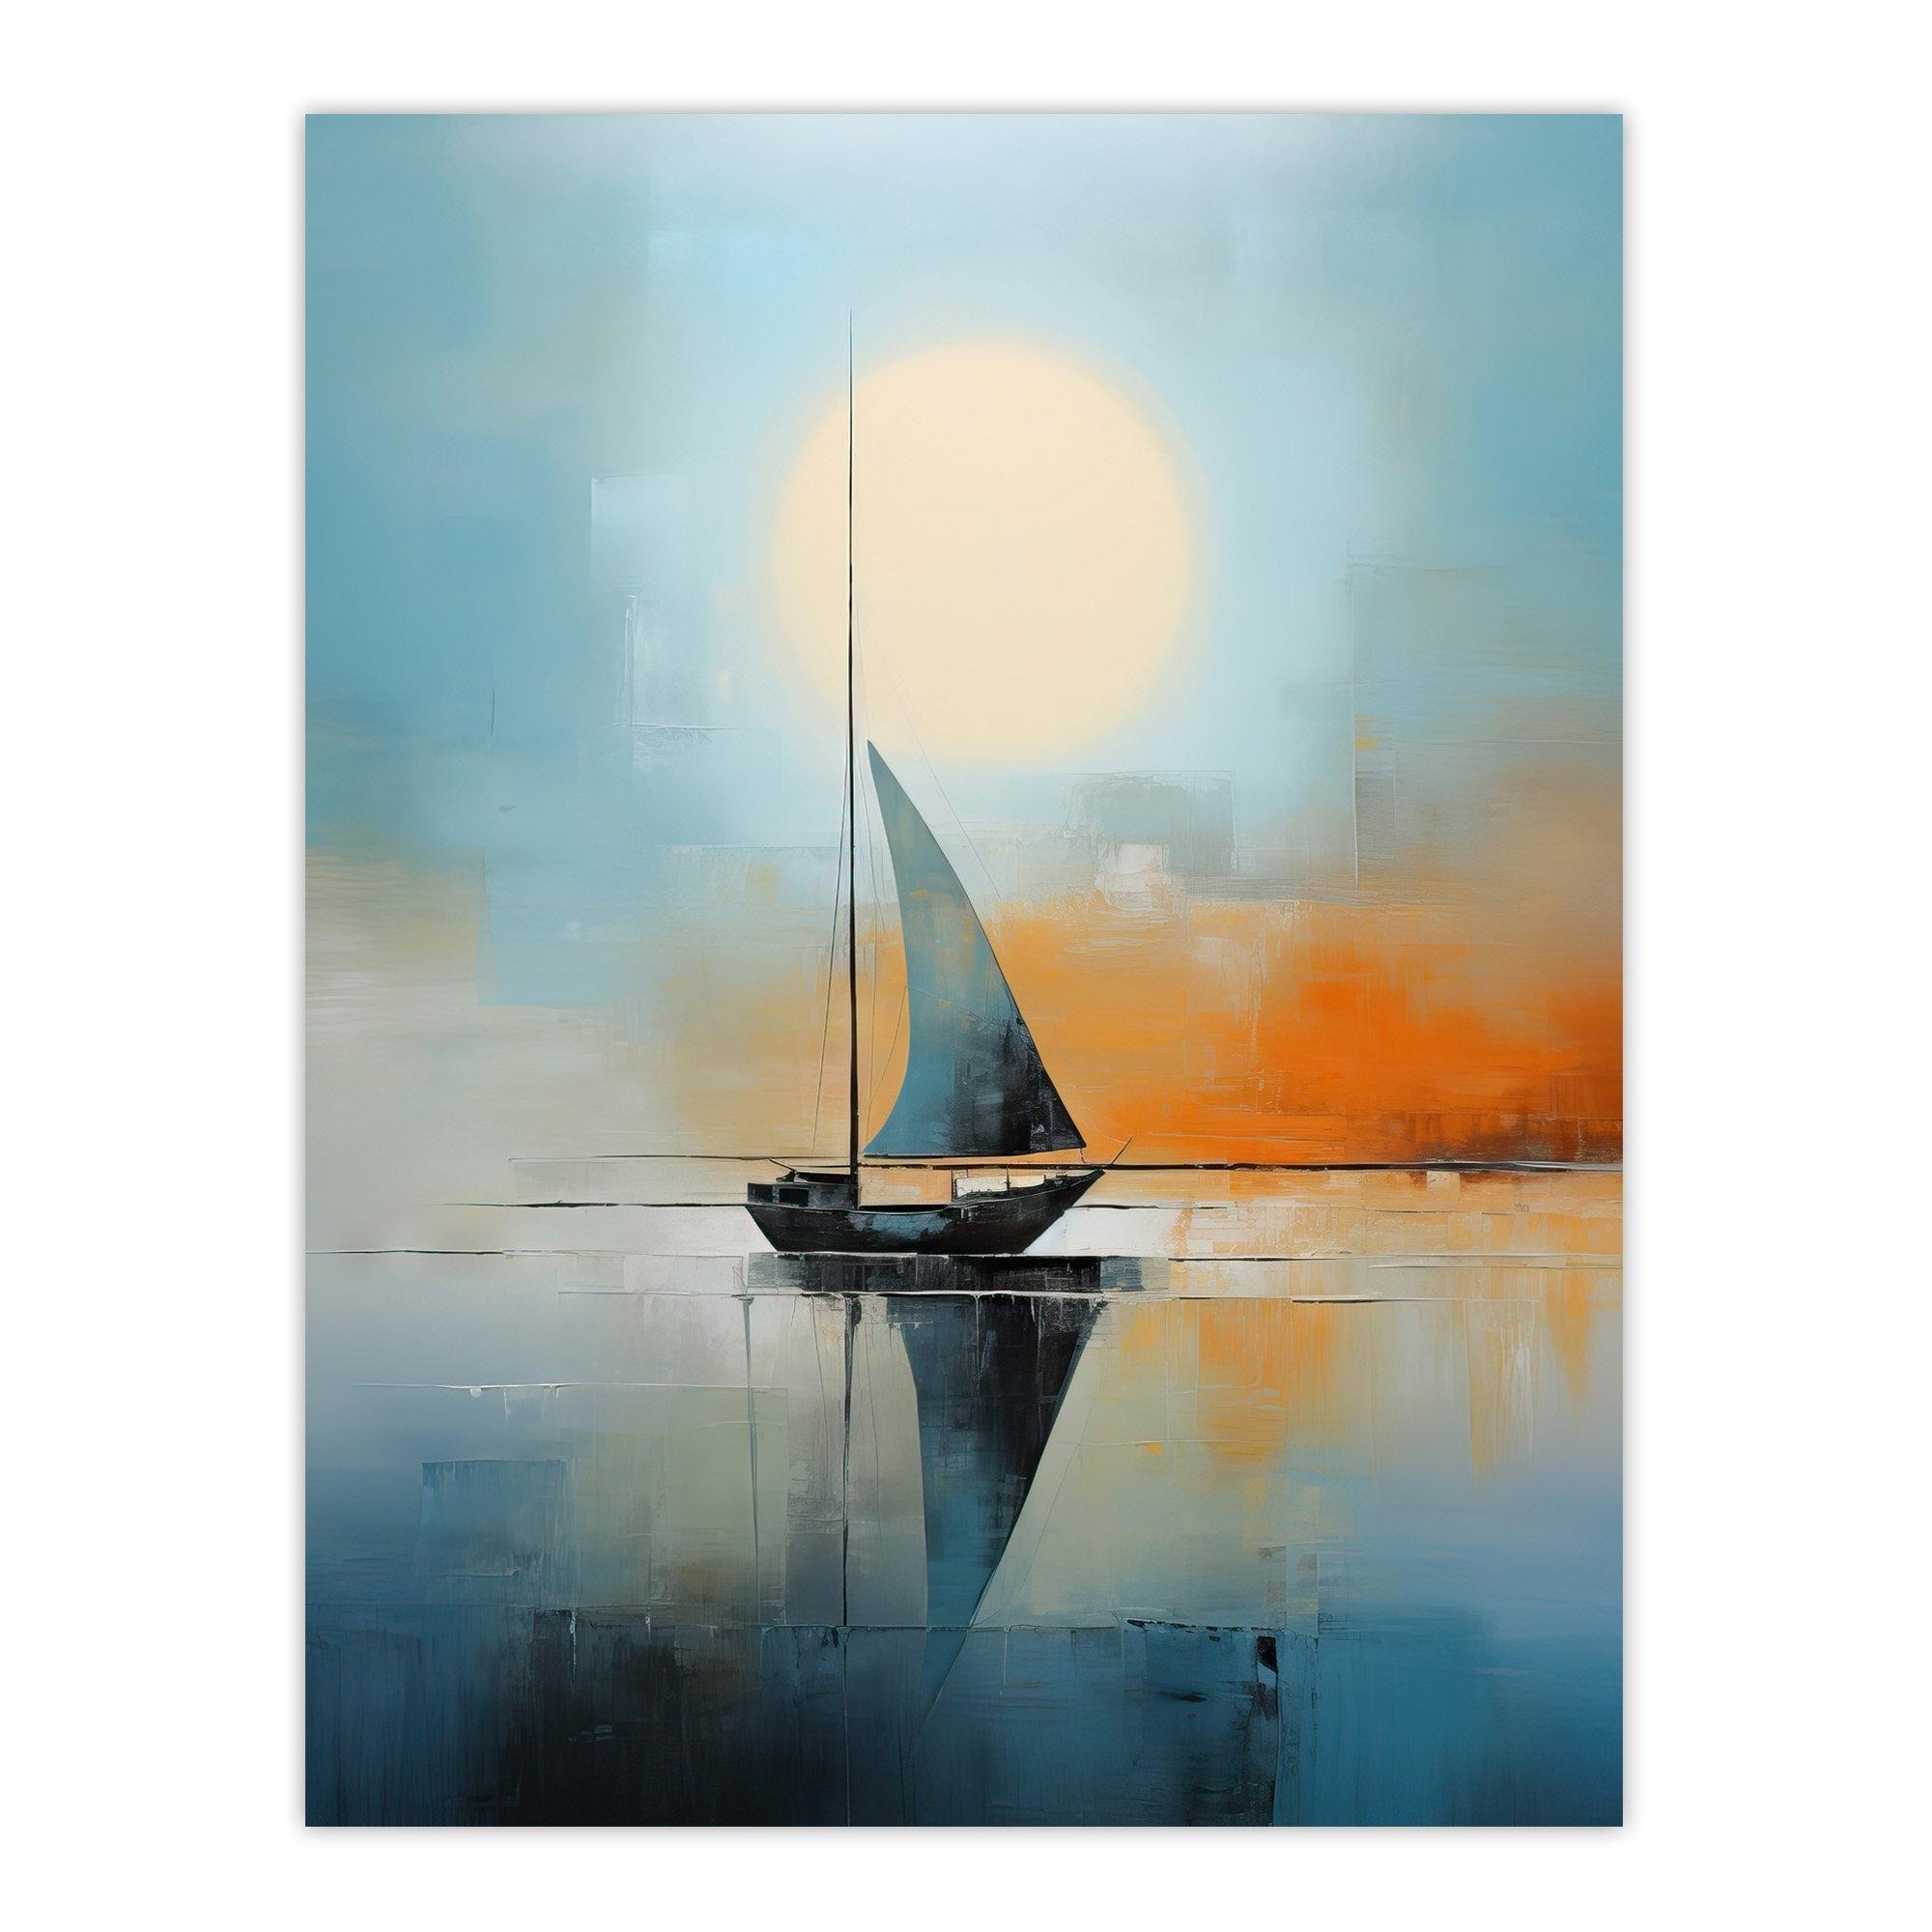 Seascape Modern Abstract Sailboat Boat Artwork Calm Elegant Blue On Orange Unframed Wall Art Print Poster Home Decor Premium - image 1